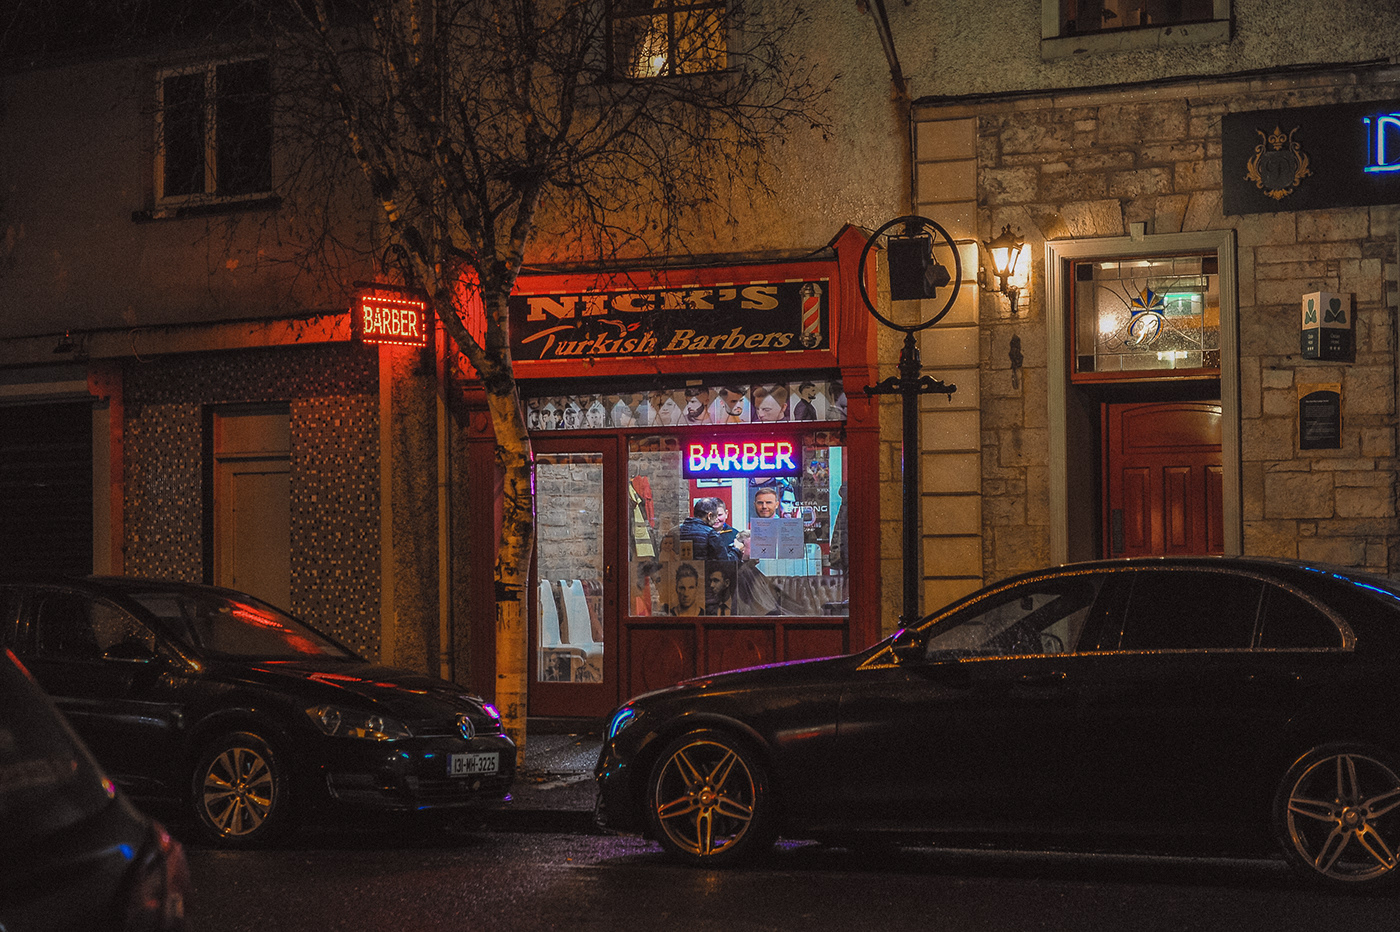 city cityscape Ireland lights neon nightphotography Nikon Photography  rafalwojcicki street photography